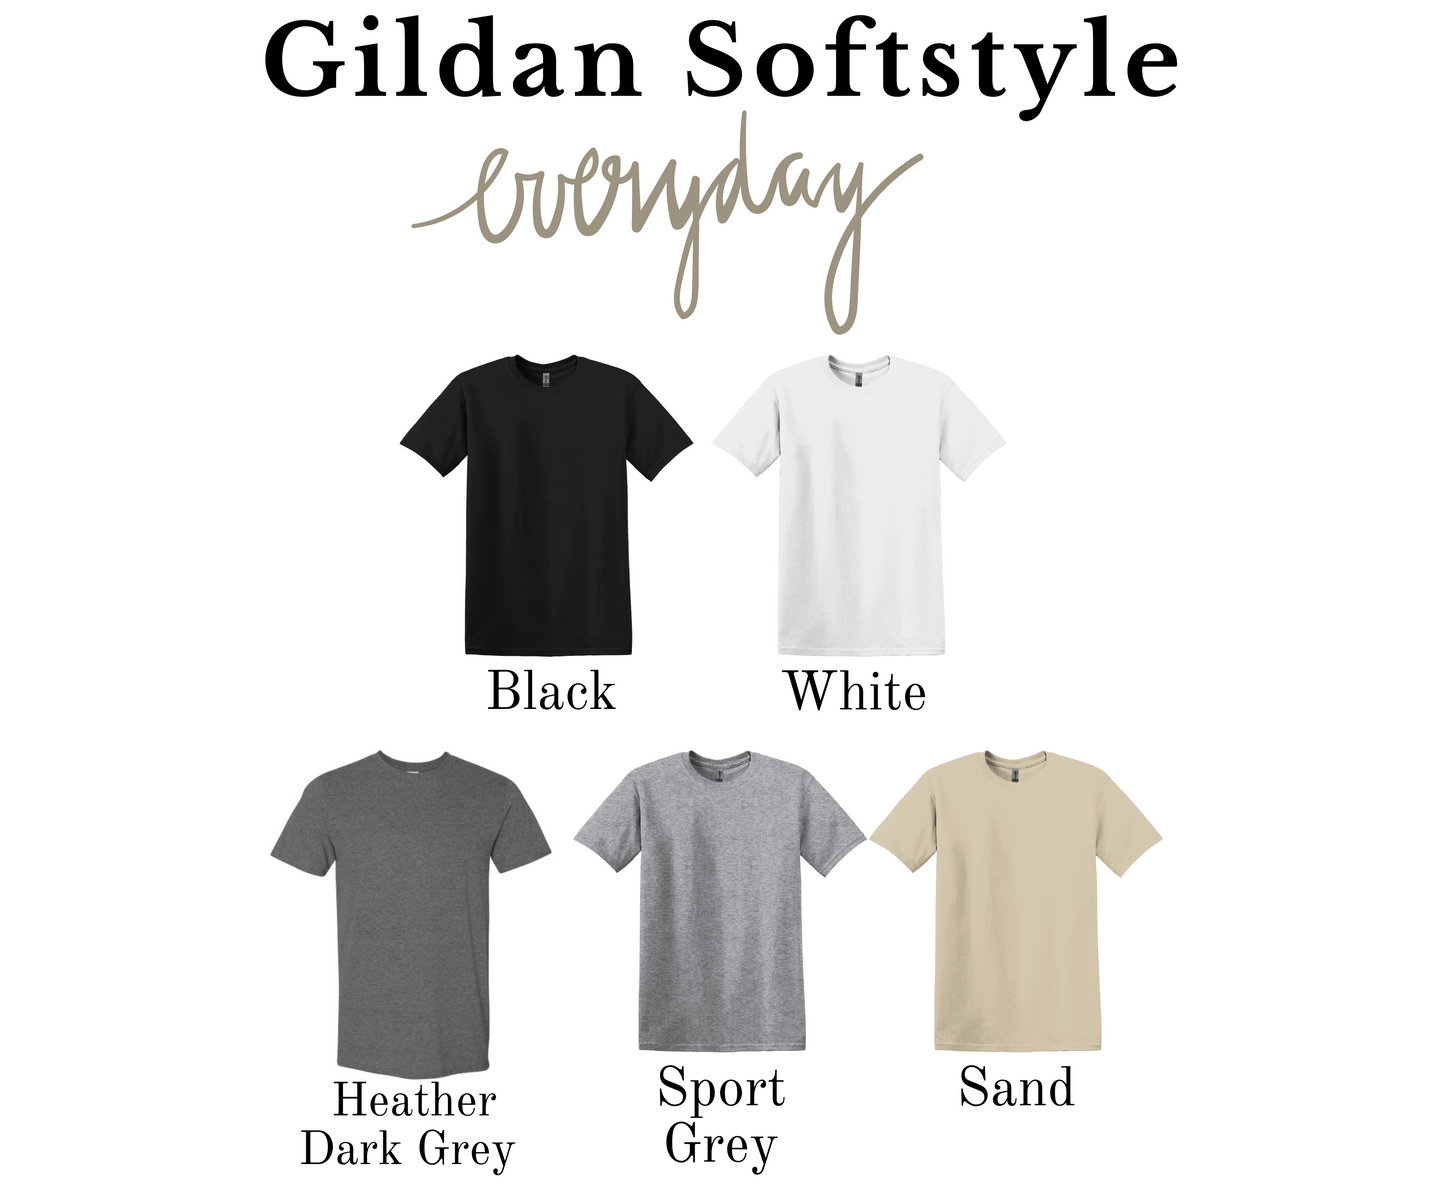 Soccer Arch Gildan Softstyle Sweatshirt or T-shirt